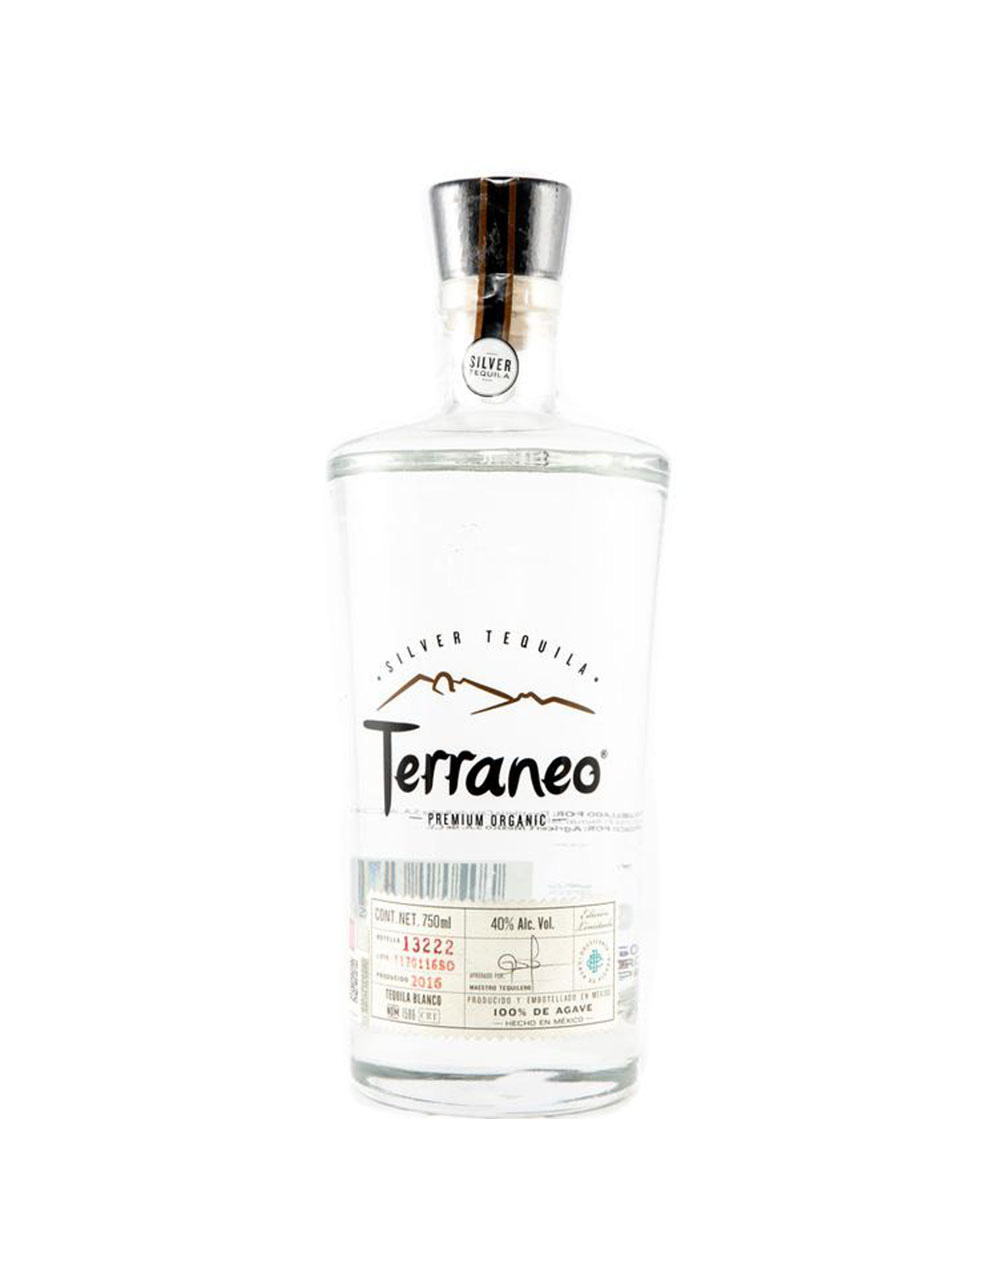 Terraneo Organic Silver Tequila